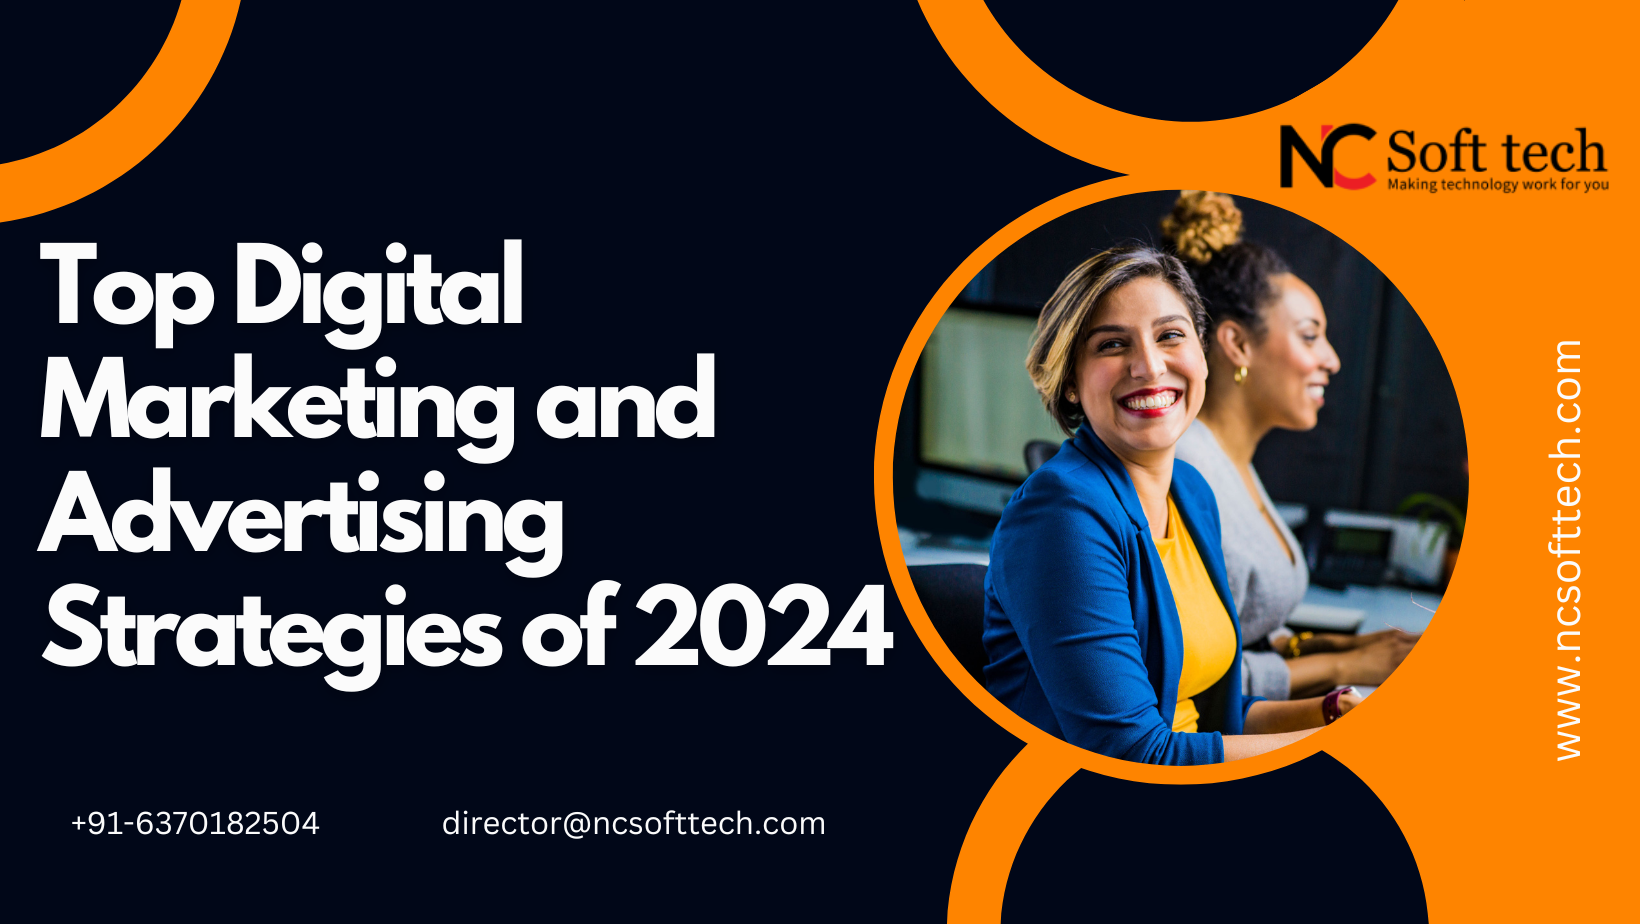 Top Digital Marketing and Advertising Strategies of 2024